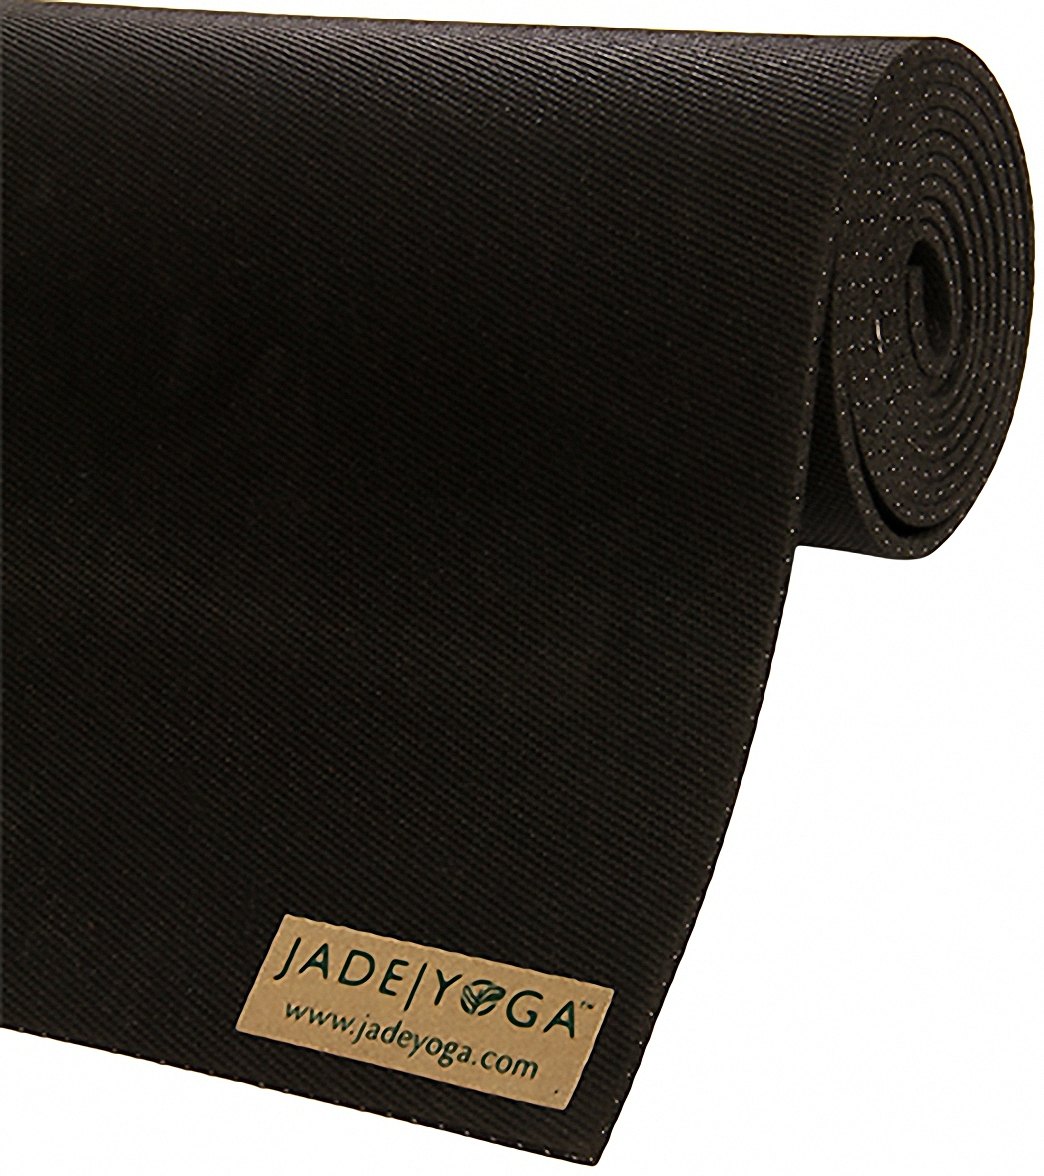 Jade Yoga Harmony Natural Rubber Yoga Mat 74 5mm Yoga Mat at